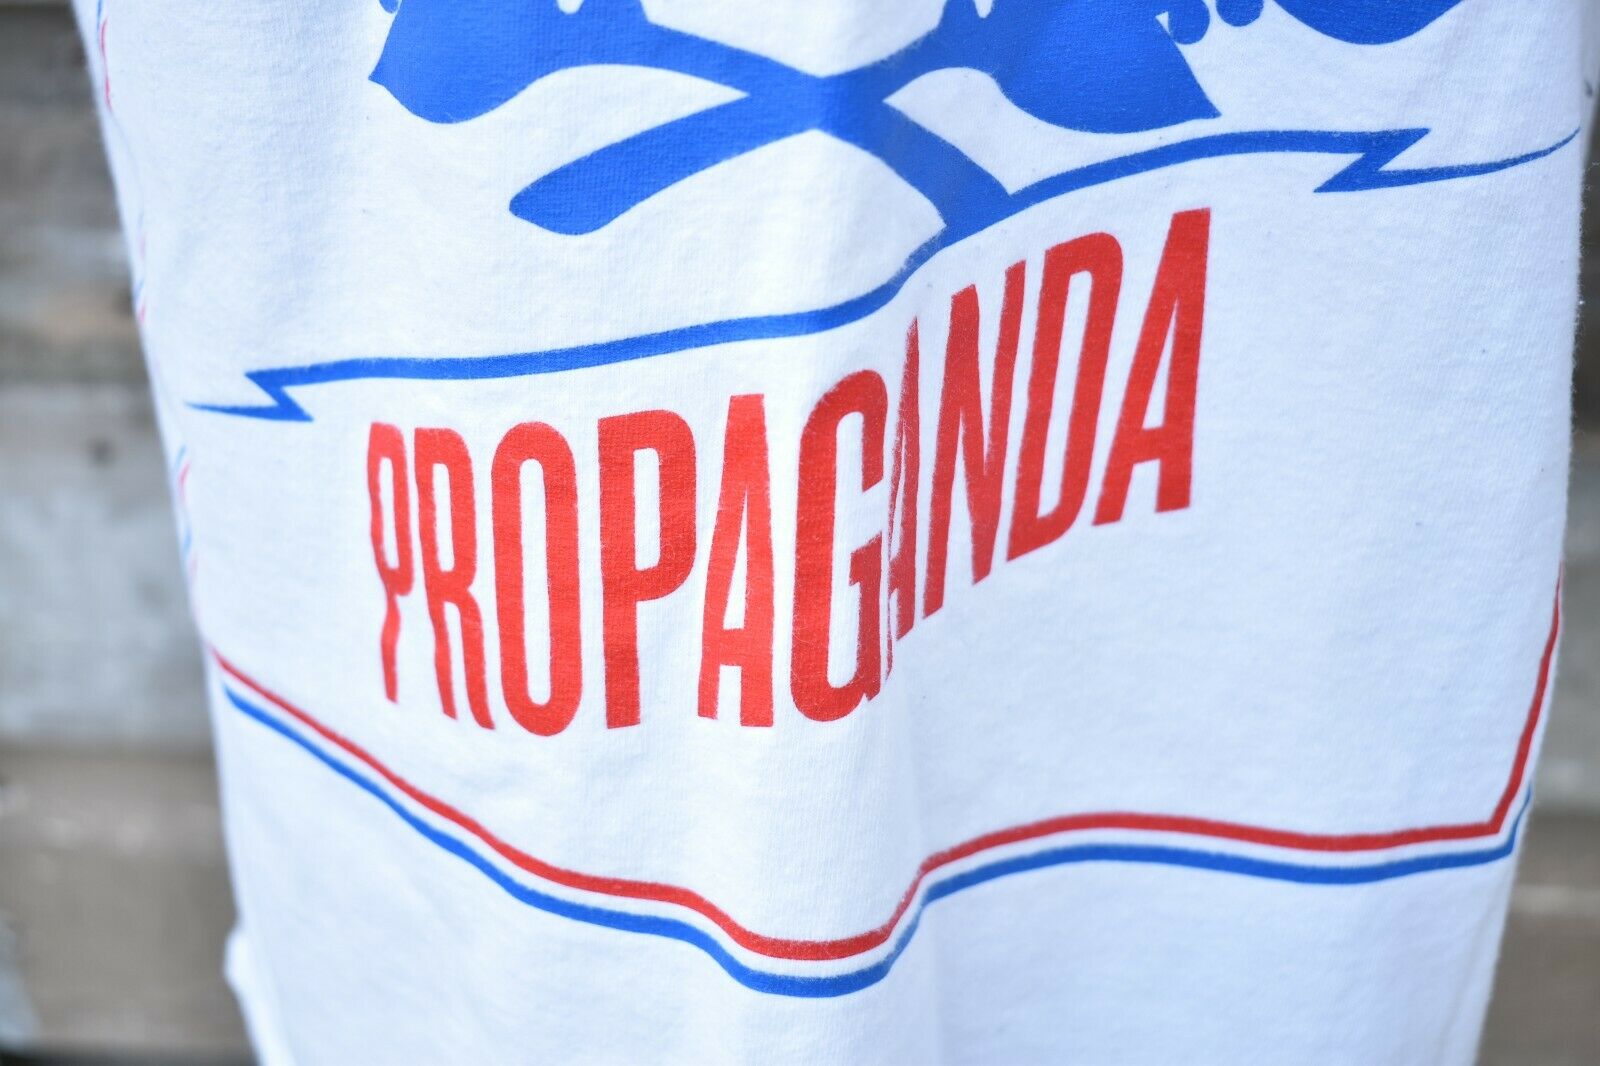 Vintage Obey 'propaganda' Blue T-shirt, Size Small 